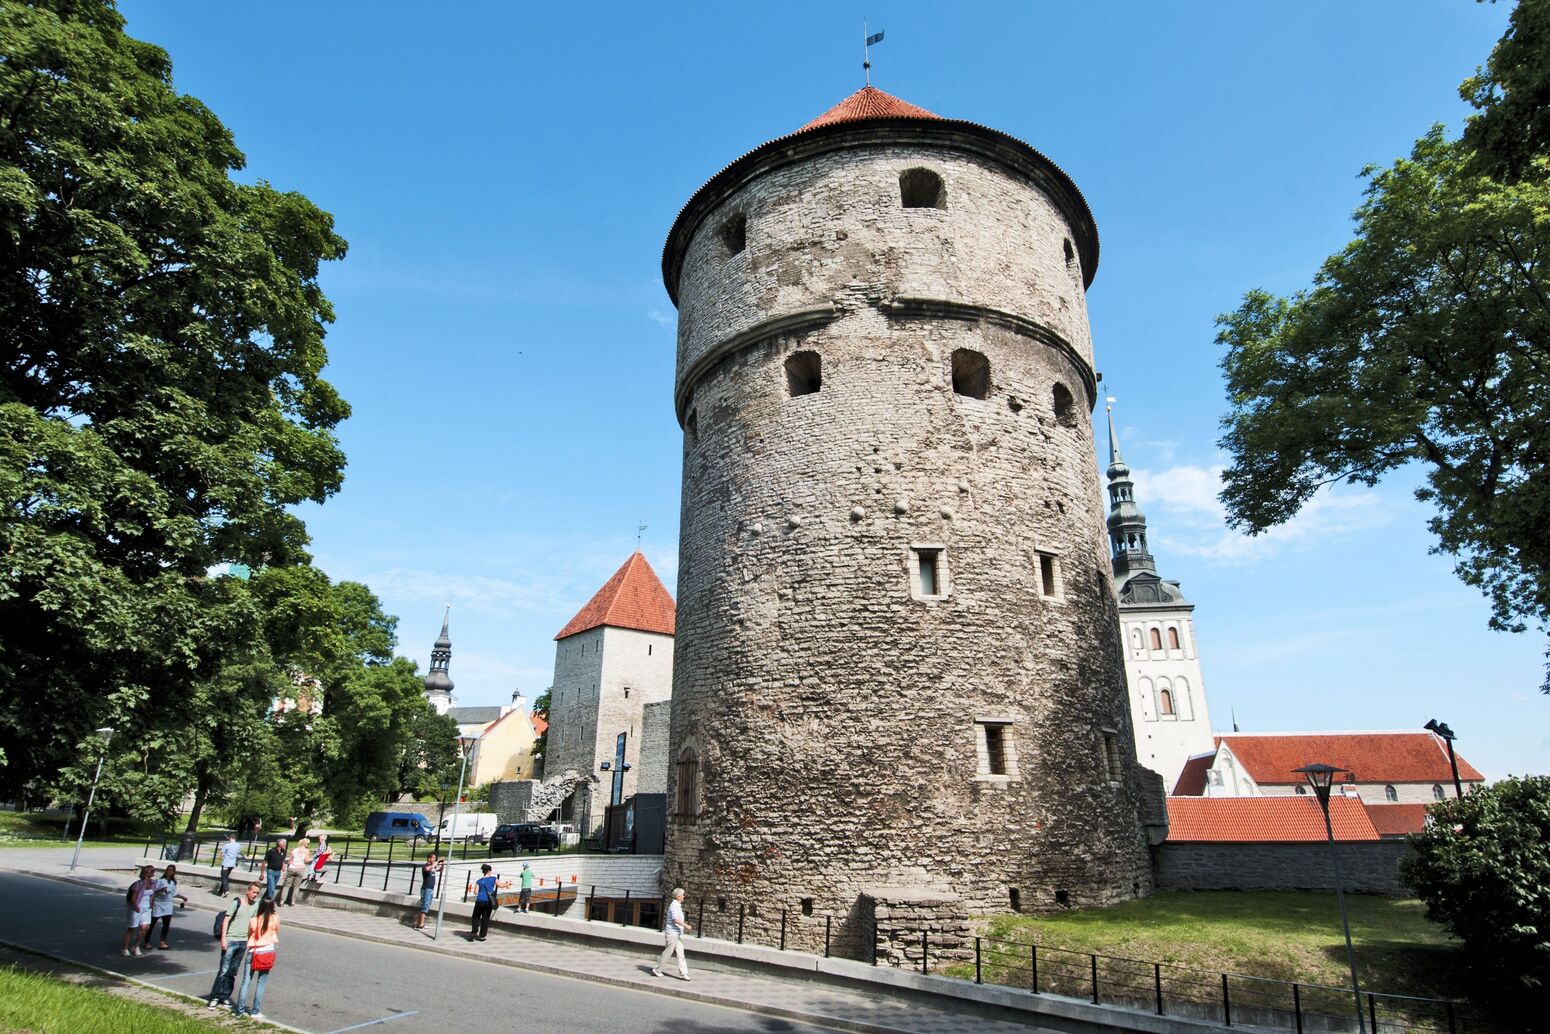 Destination, Tallin, excursion, outdoor photography, Northern Europe, Tree, Tower, Estonia, Tallinn, Kiek in de Kok